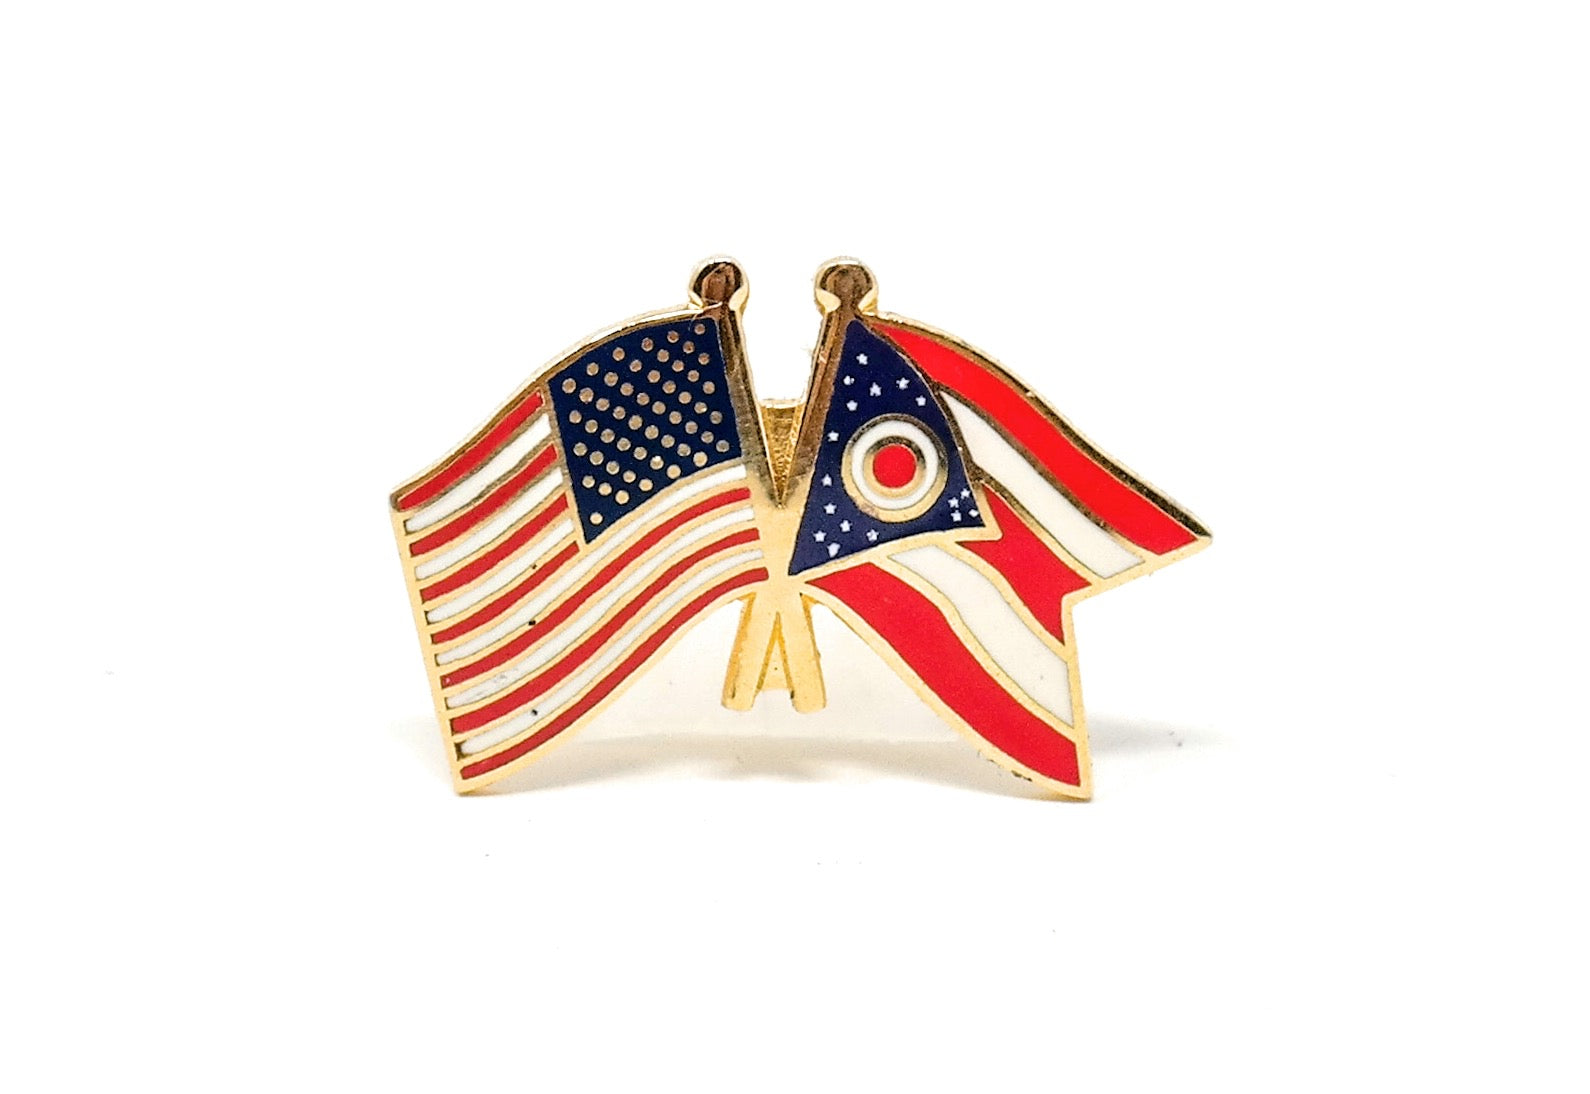 Ohio State & USA Friendship Flags Lapel Pin